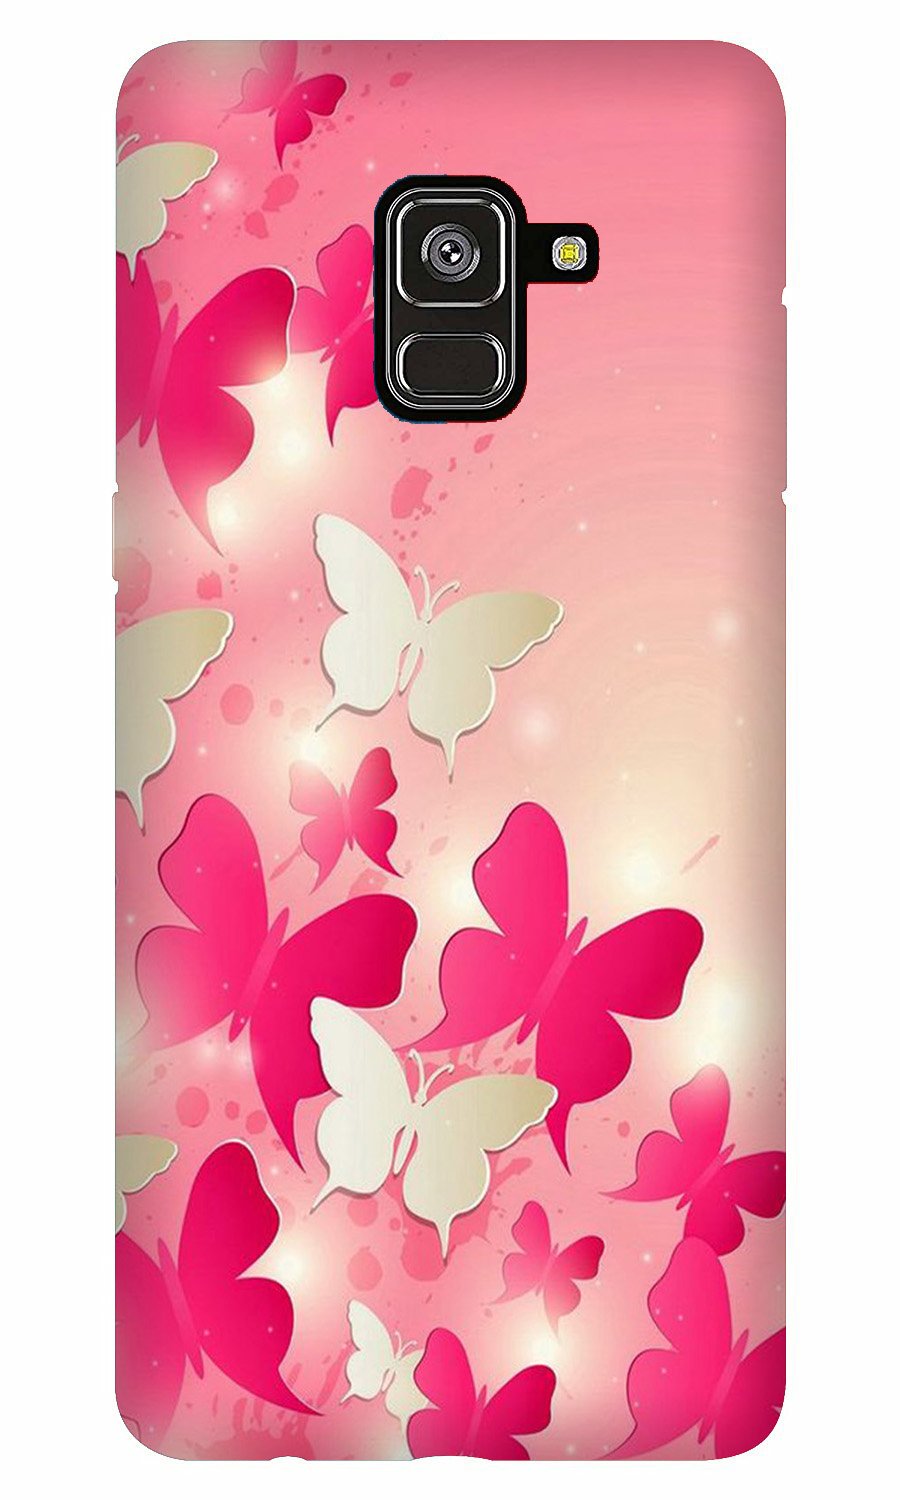 White Pick Butterflies Case for Galaxy A8 Plus